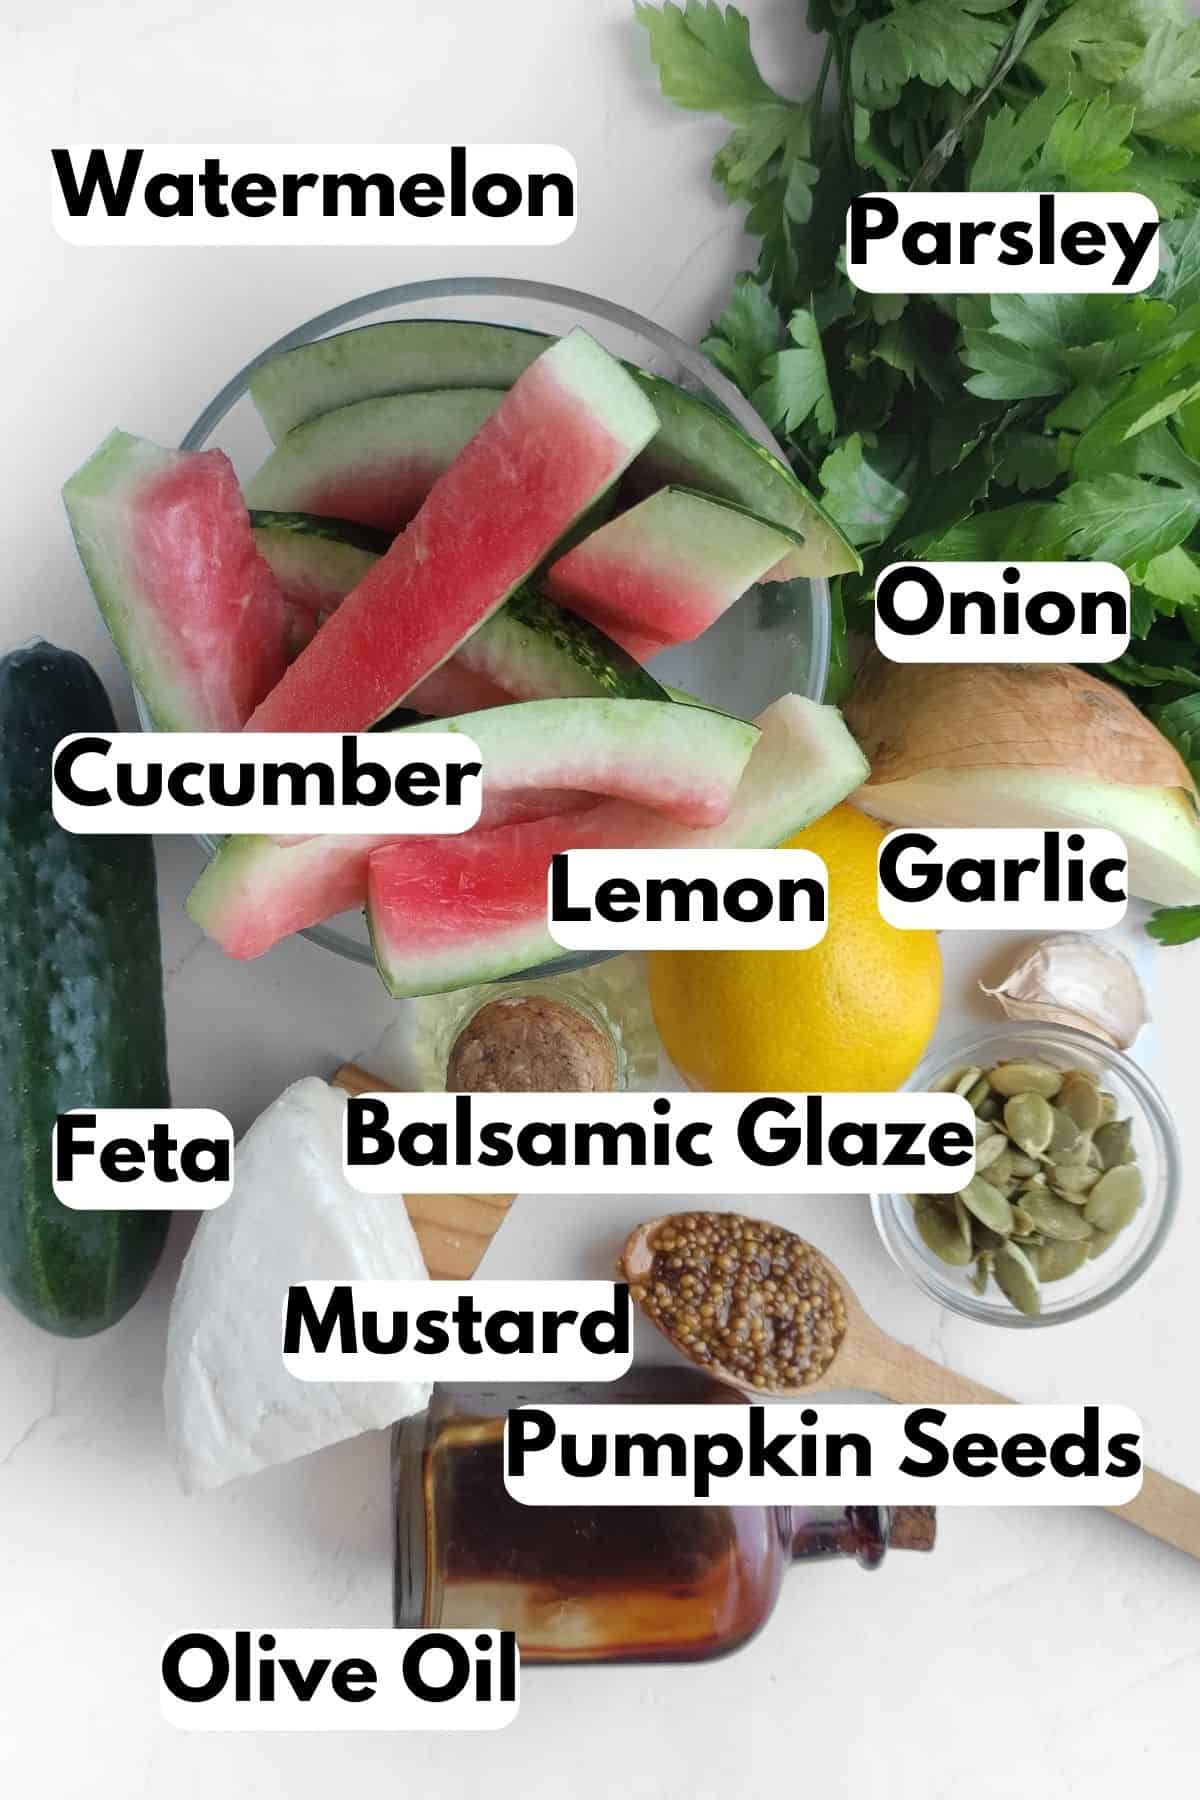 Ingredients needed for watermelon feta salad: watermelon, parsley, onion, cucumber, lemon, garlic, feta, balsamic glaze, mustard, pumpkin seeds, and olive oil.